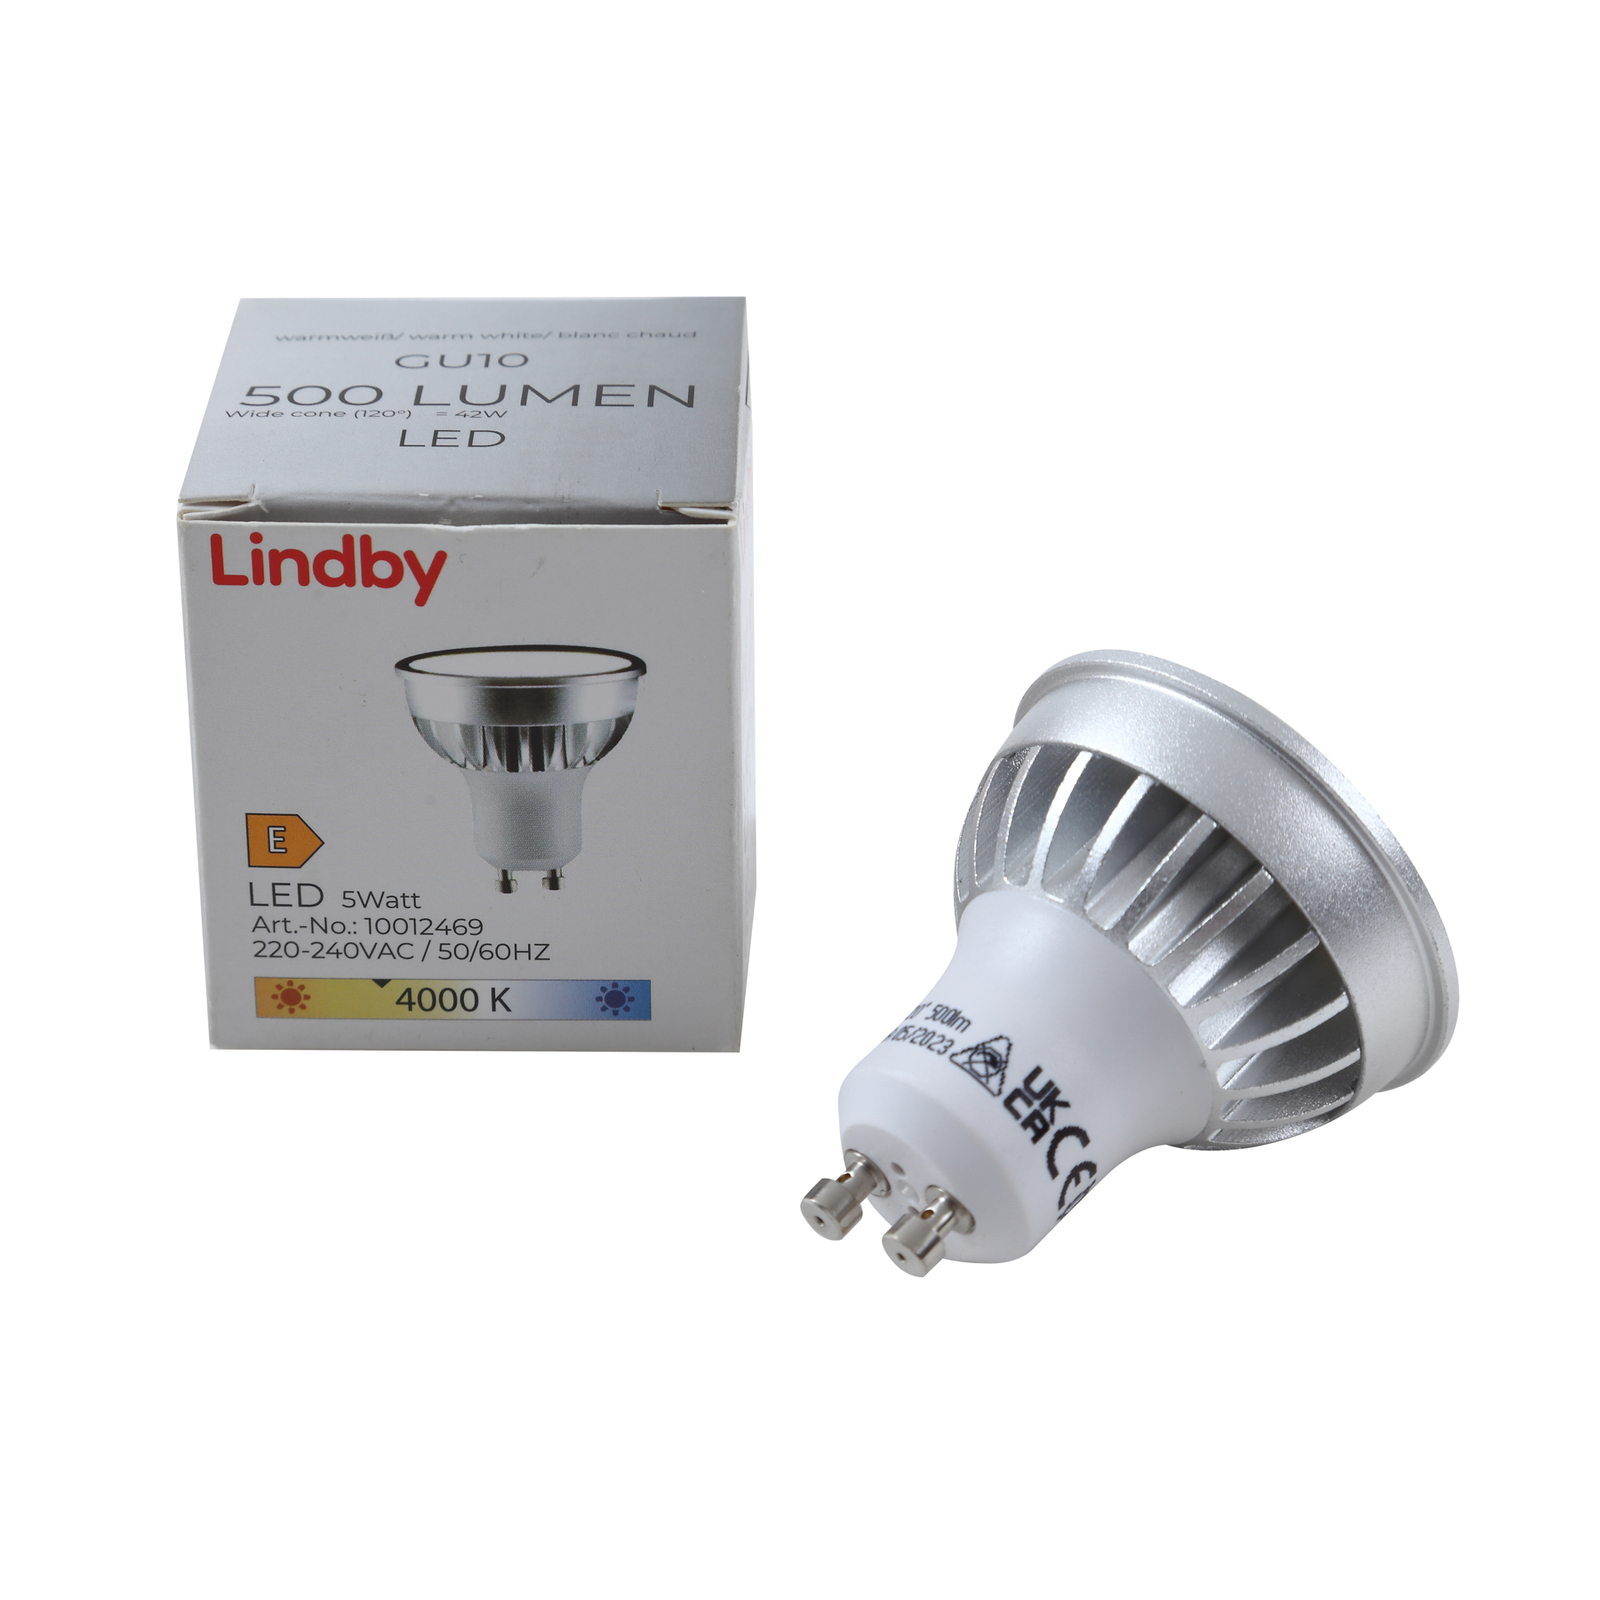 Lindby LED atstarotājs, GU10, 5 W, opāls, 4000 K, 55°